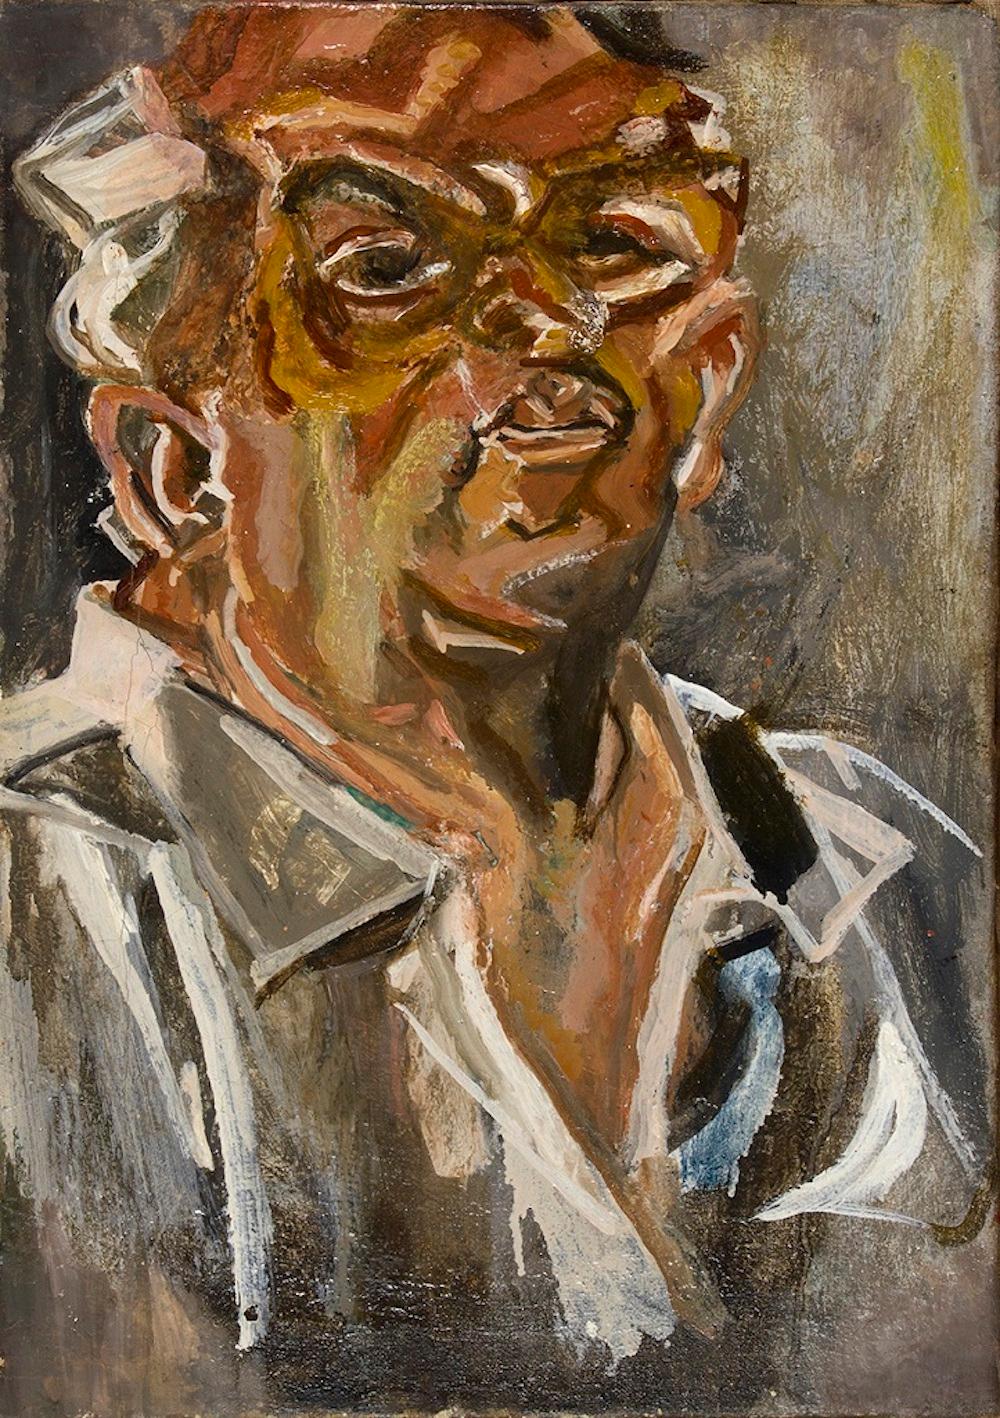 Marco Di Sefano Portrait Painting - Self-Portrait - Oil on Canvas by Marco Di Stefano - 2000s